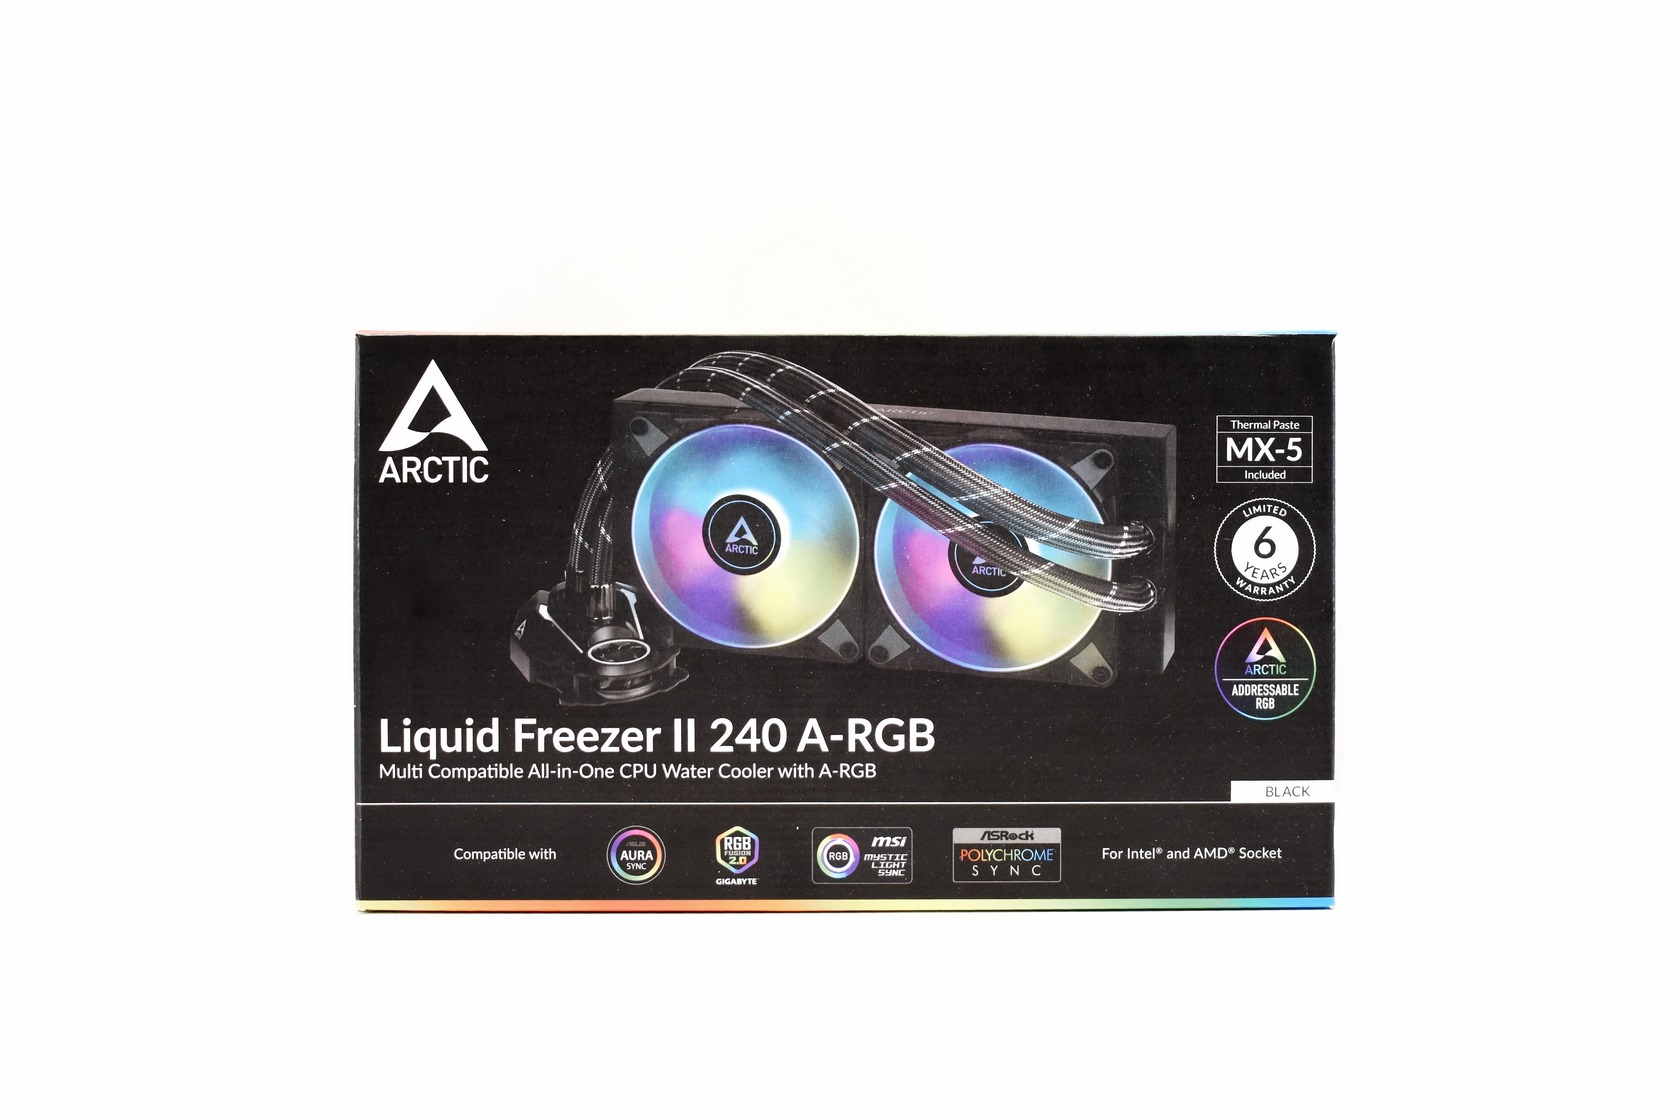 ARCTIC Liquid Freezer II 240 A-RGB AIO CPU Cooler Review